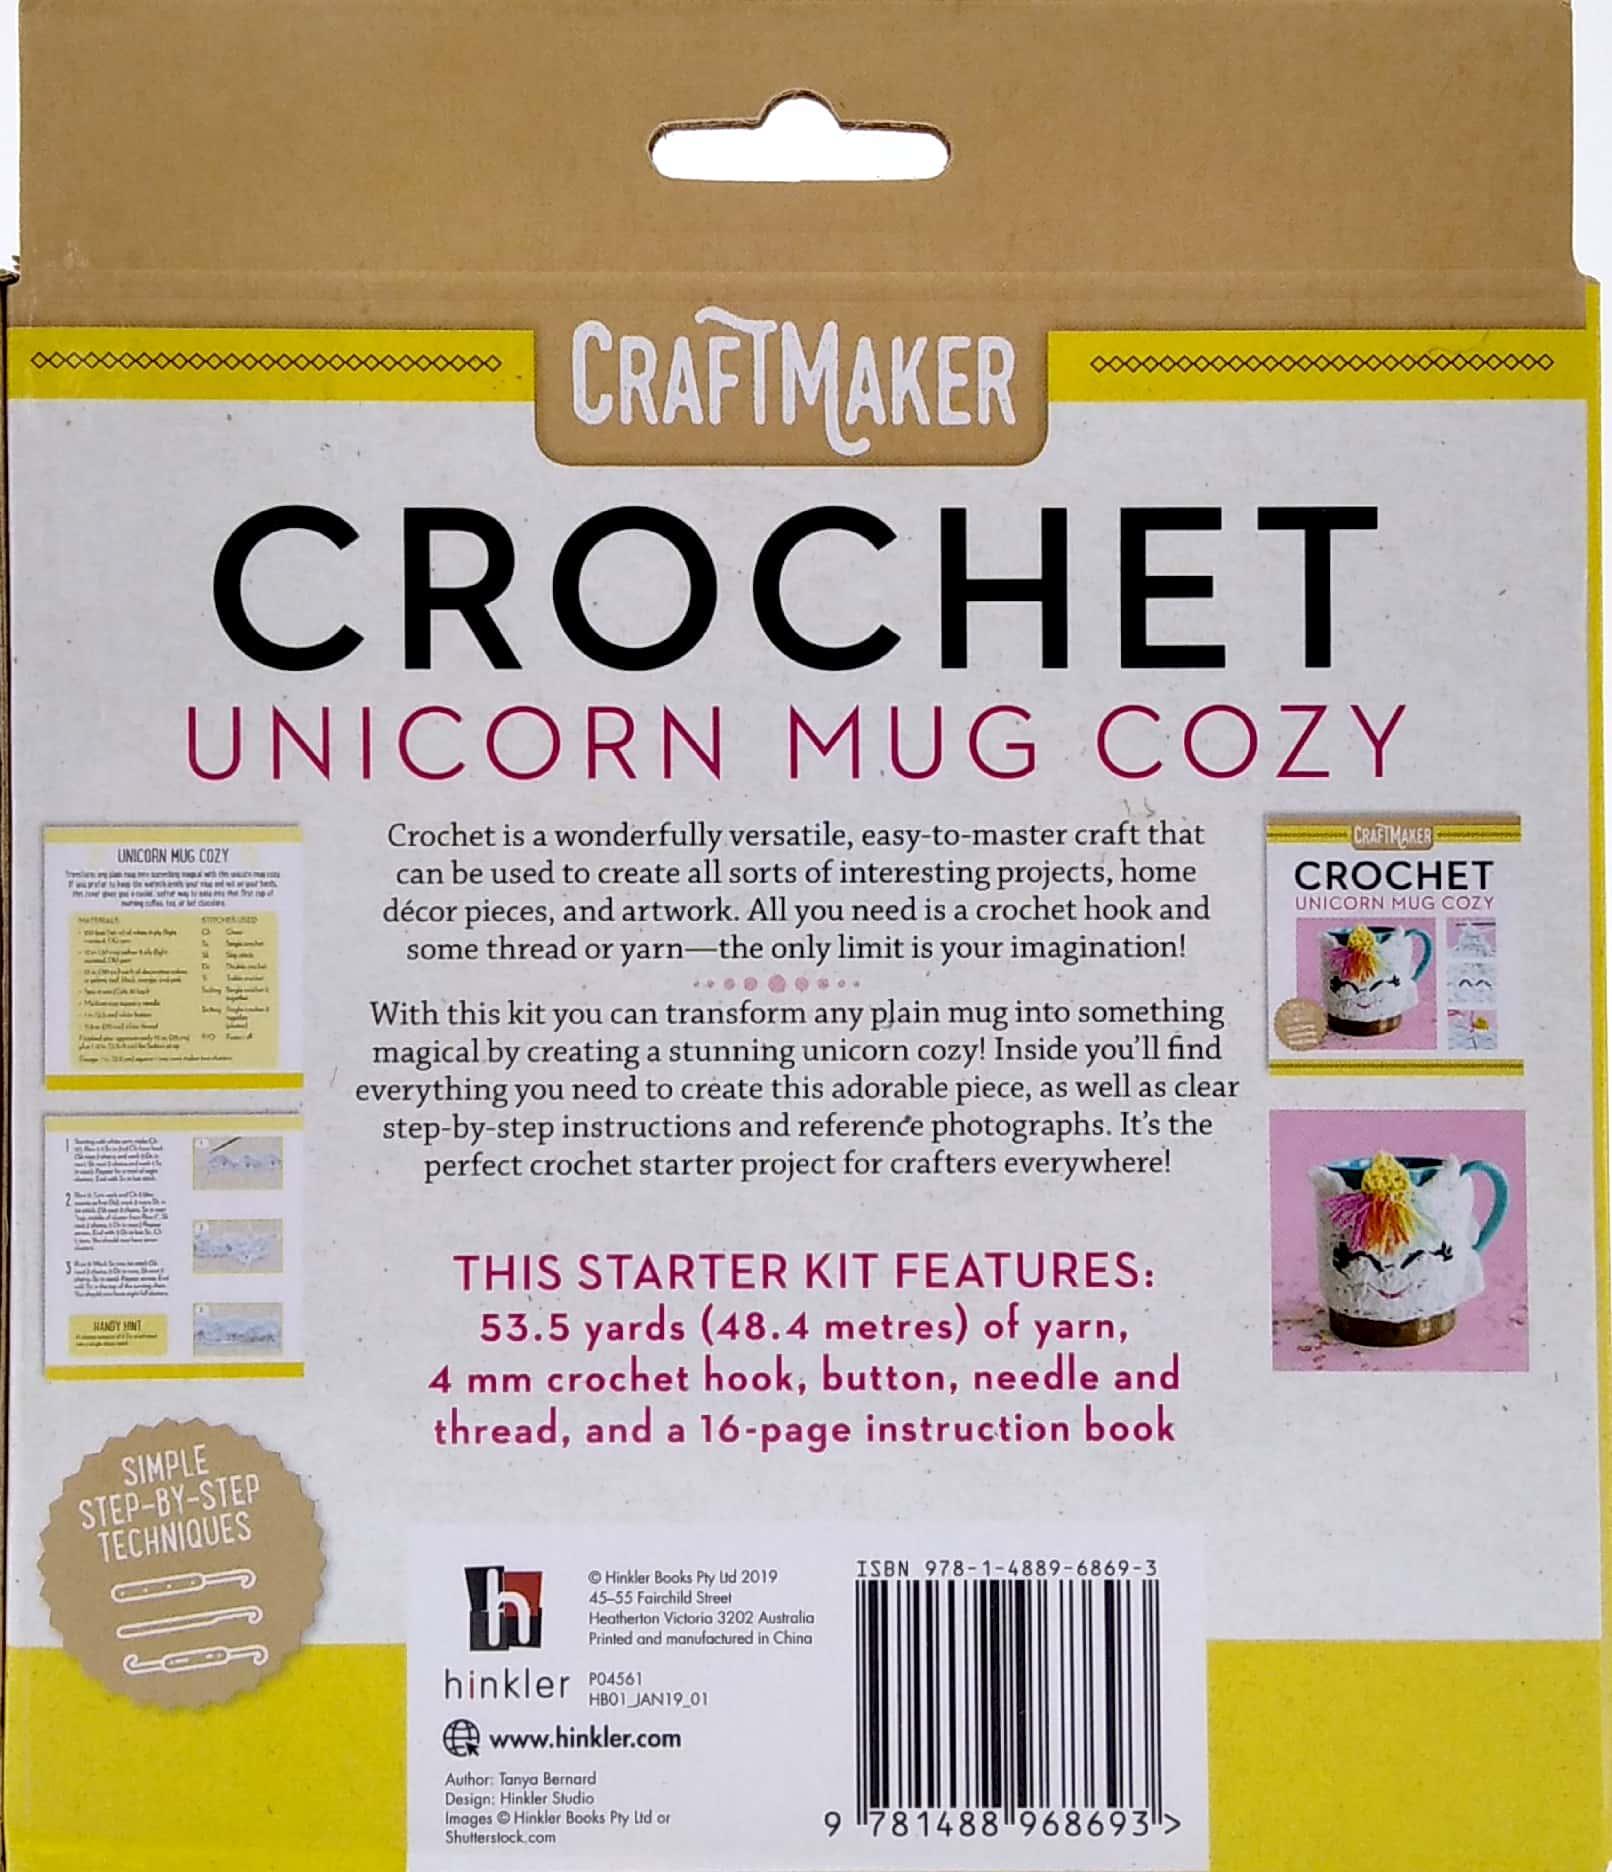 CraftMaker Crochet: Unicorn Mug Cozy